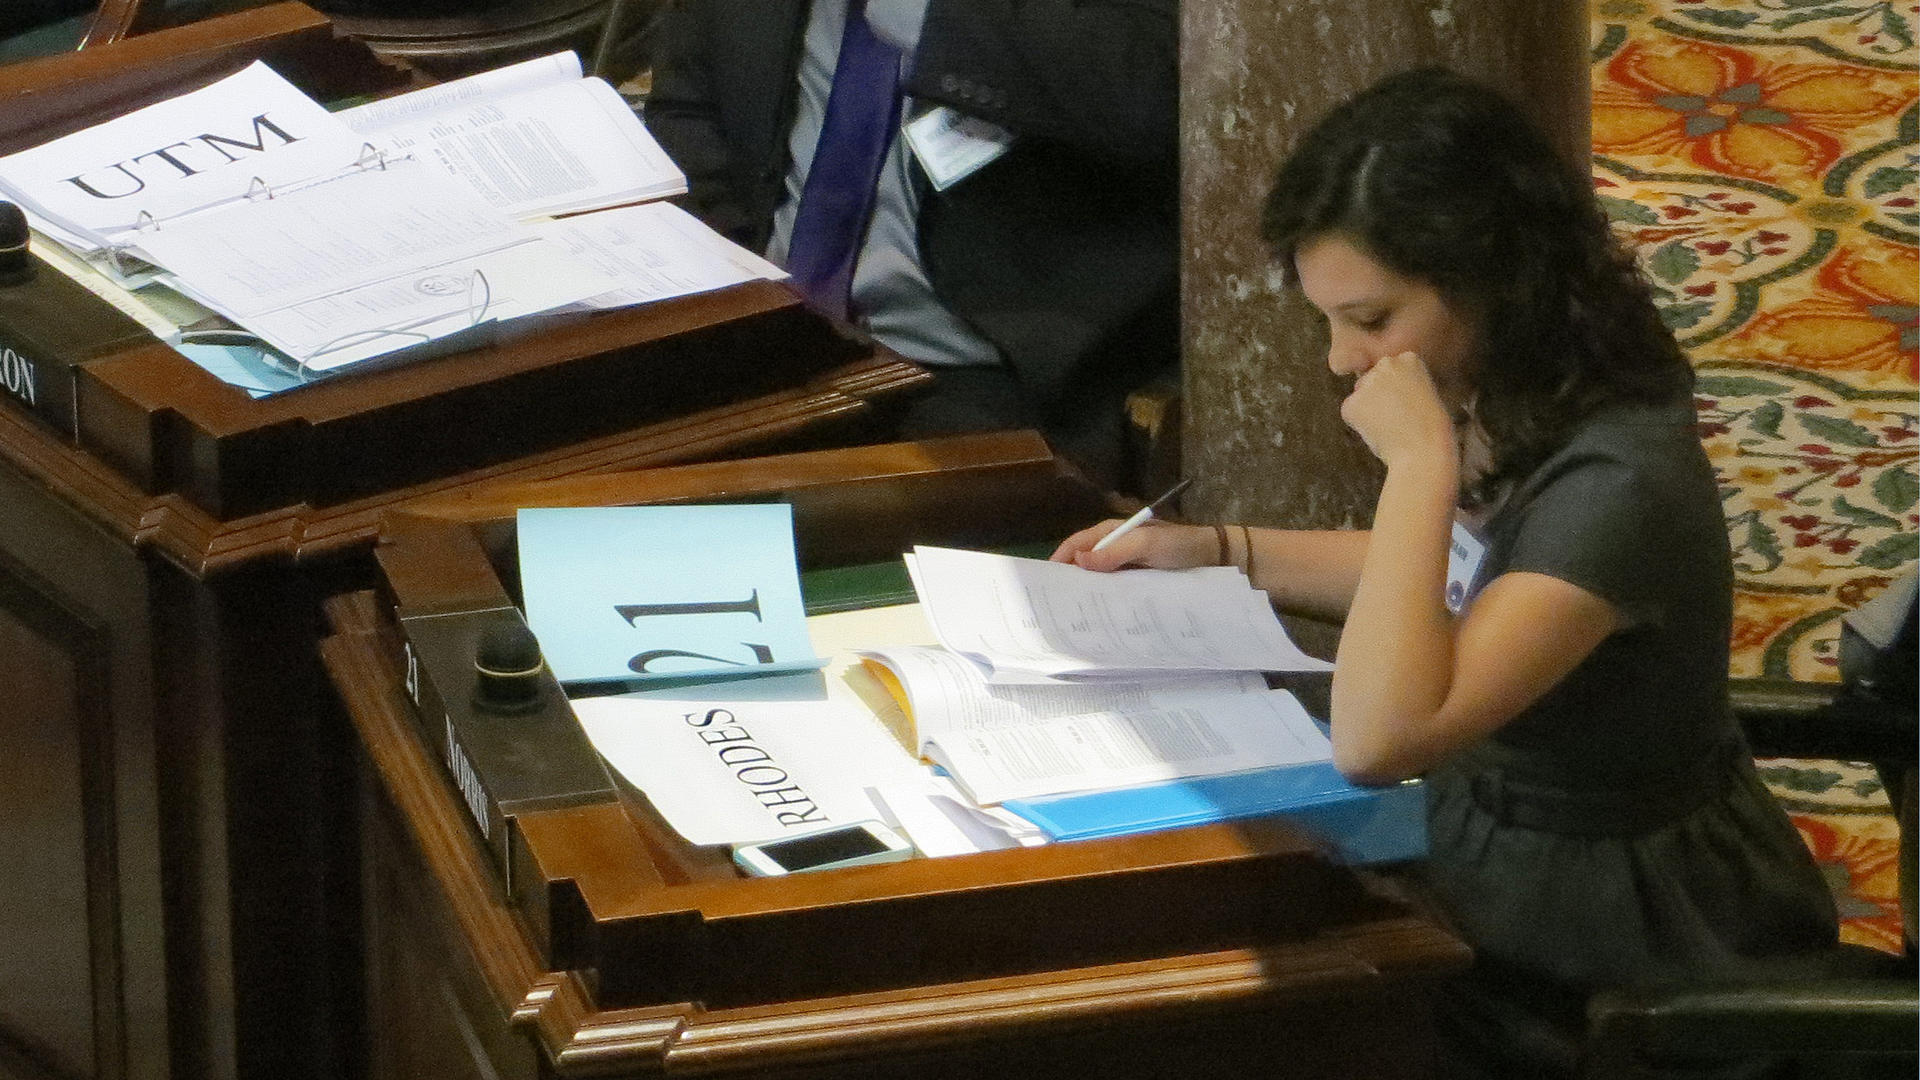 a female student studies legislative papers at a desk